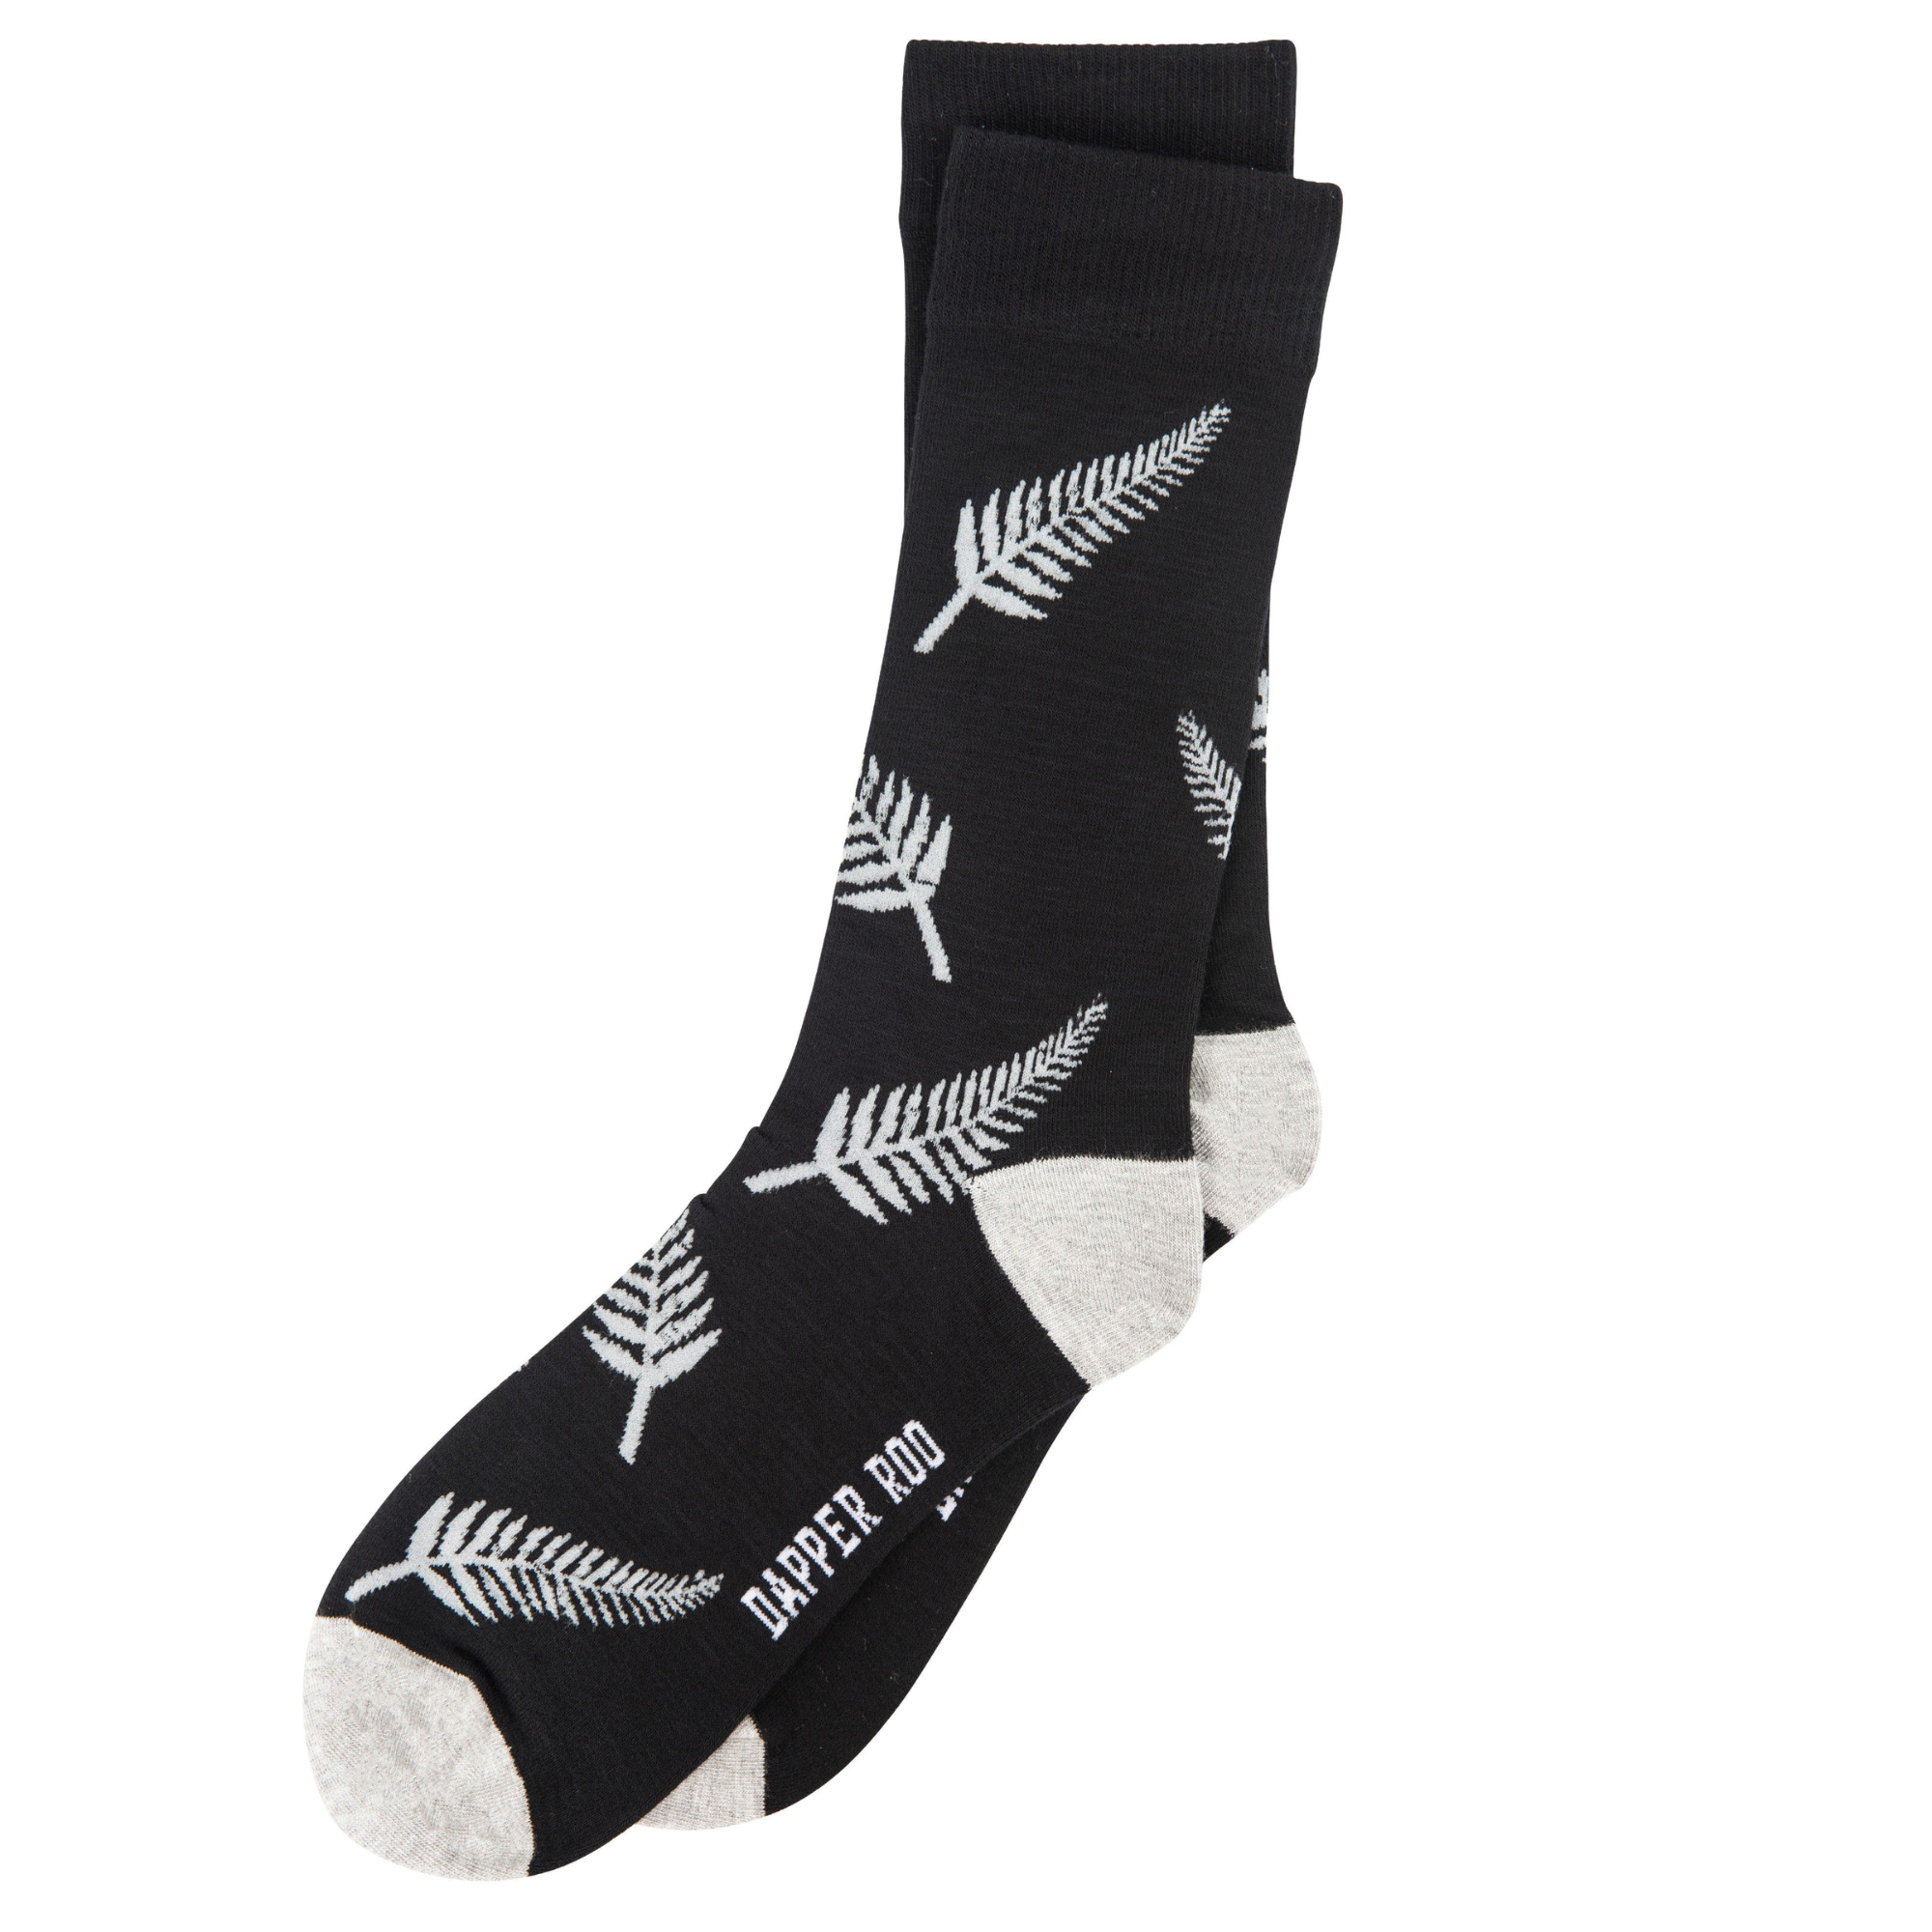 Kiwi NZ Silver Fern Bamboo Socks by Dapper Roo